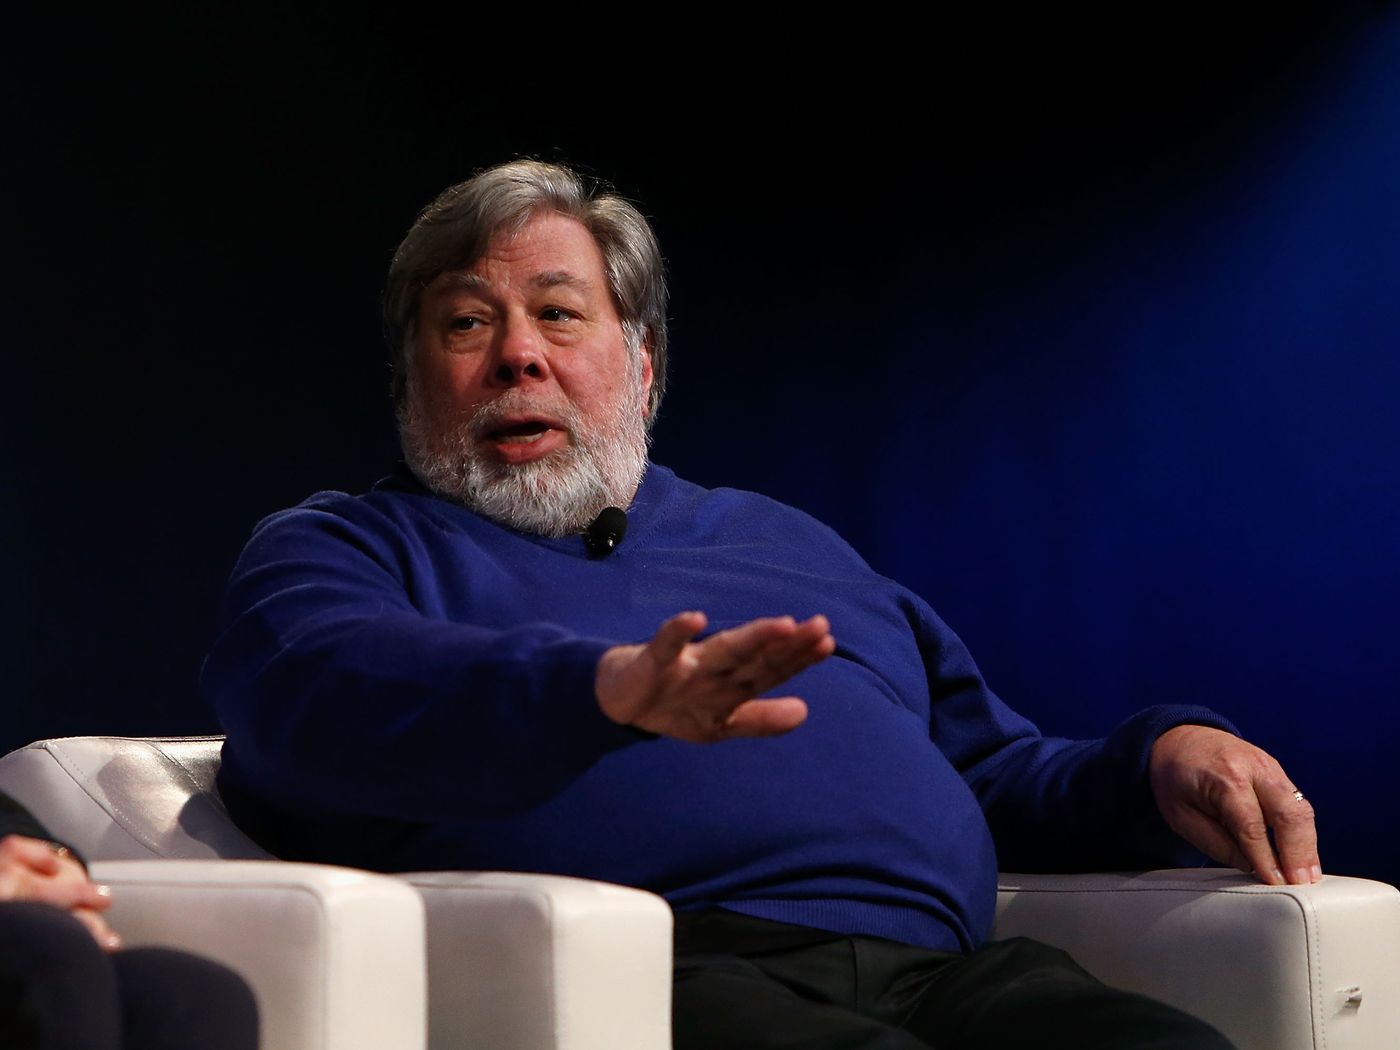 Steve Wozniak says he didn't mean Apple should be broken up